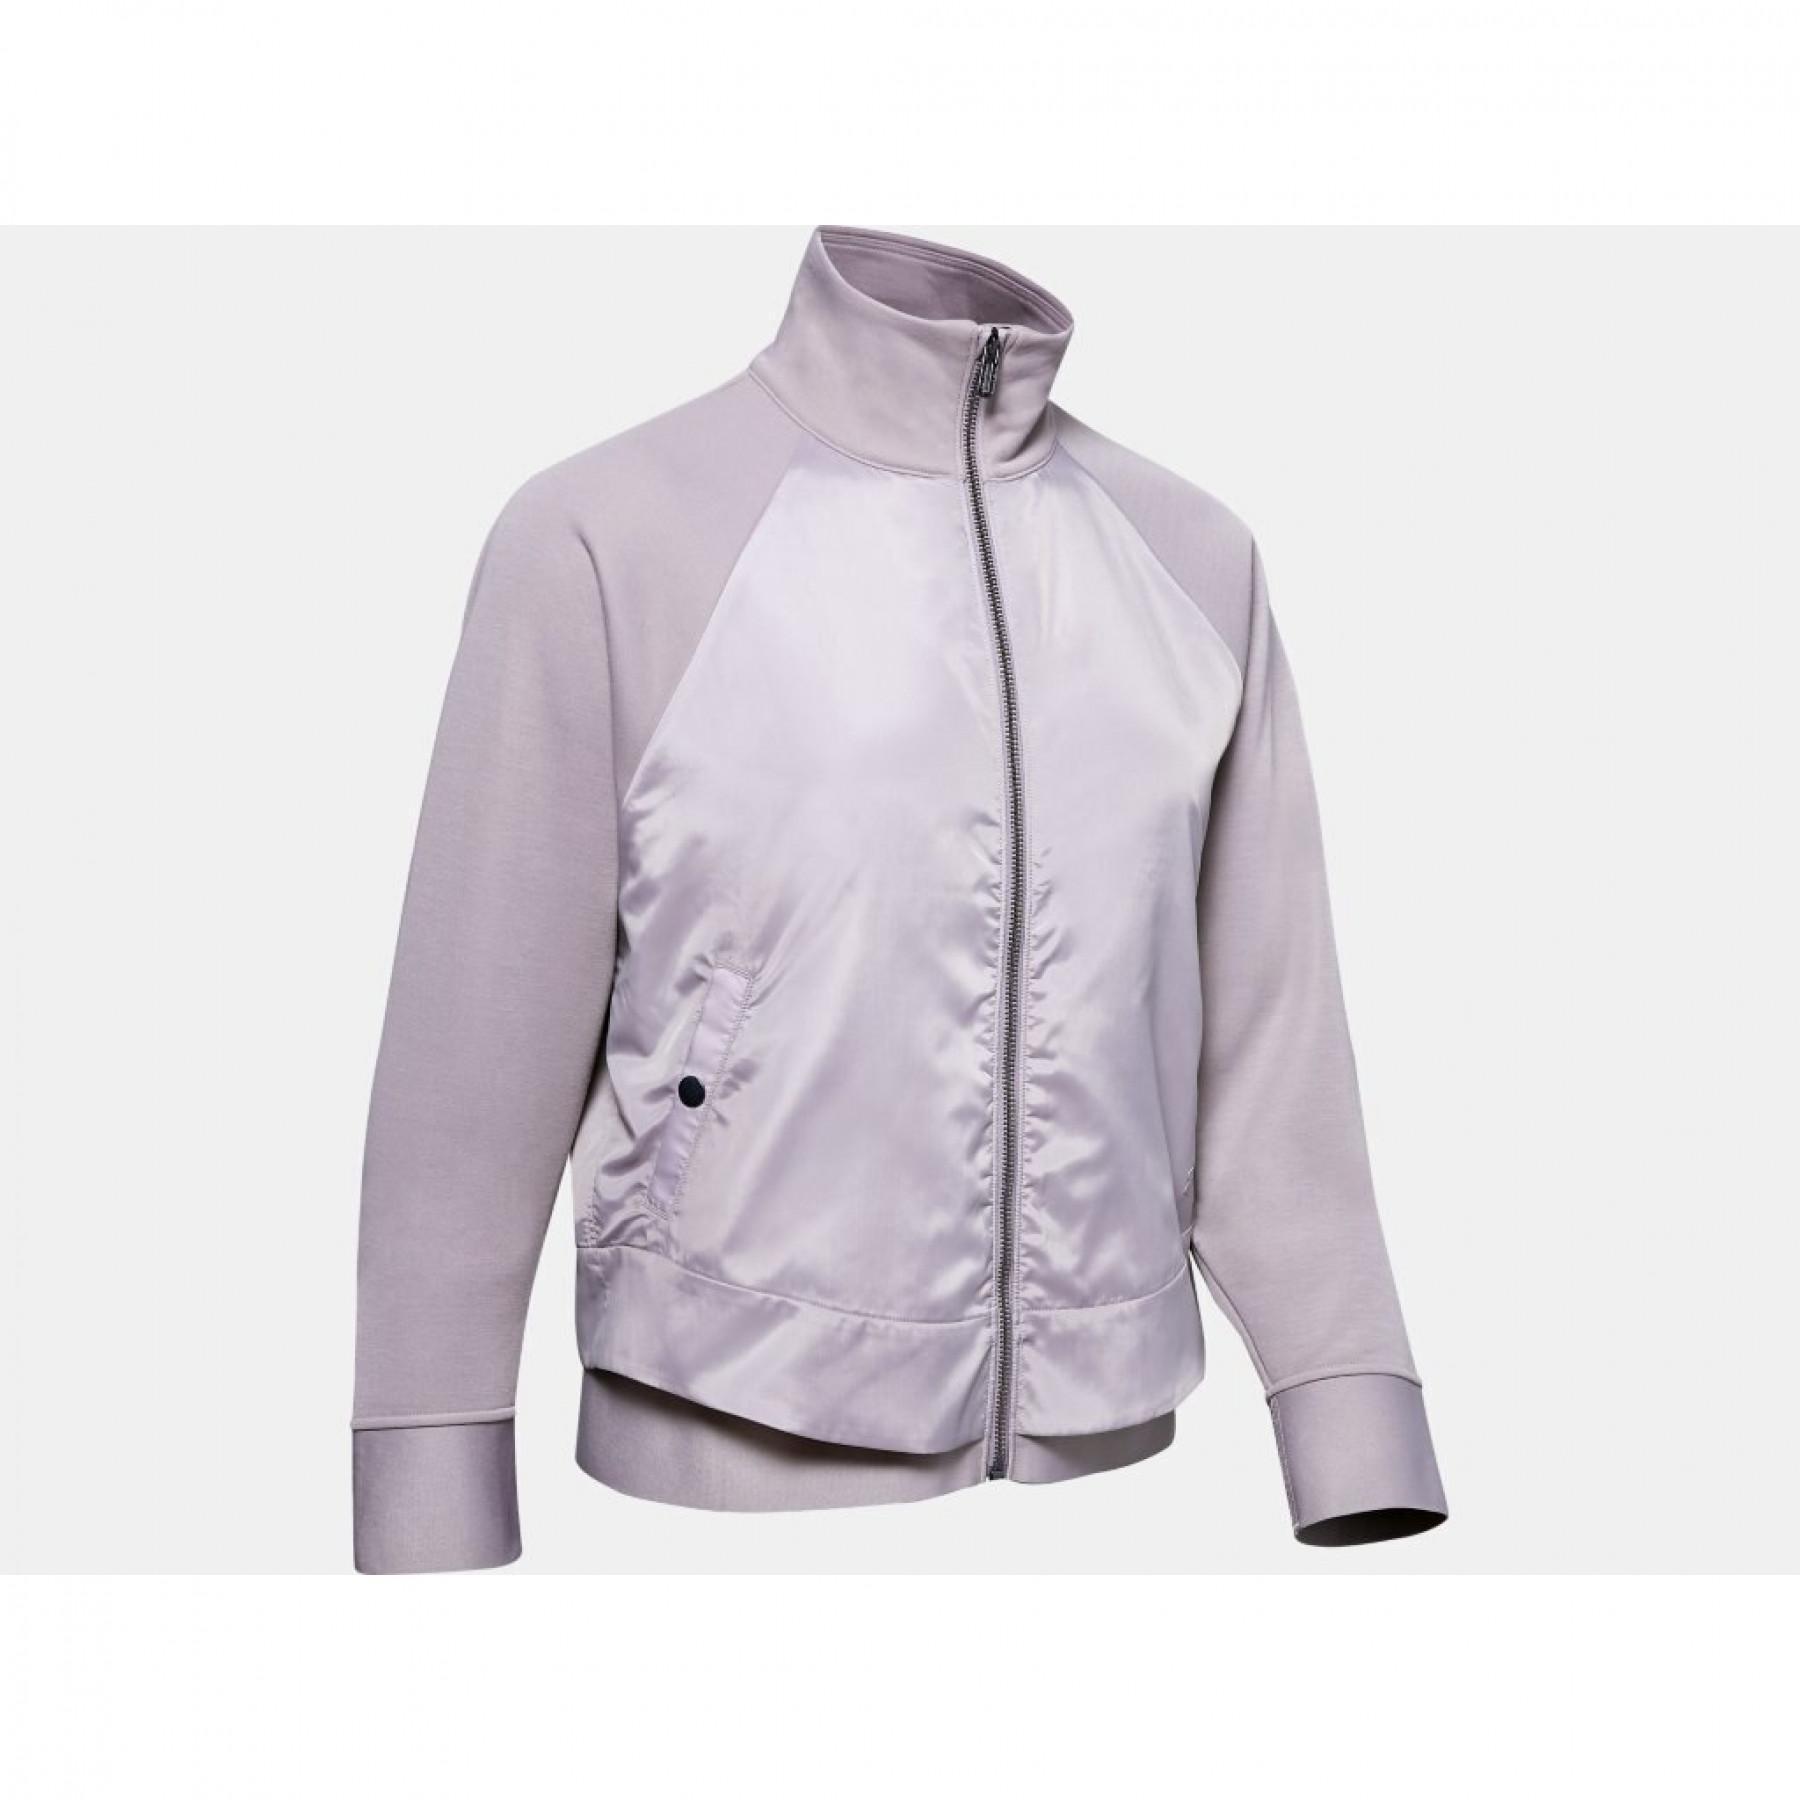 Women's jacket Under Armour Misty Copeland Signature Layer